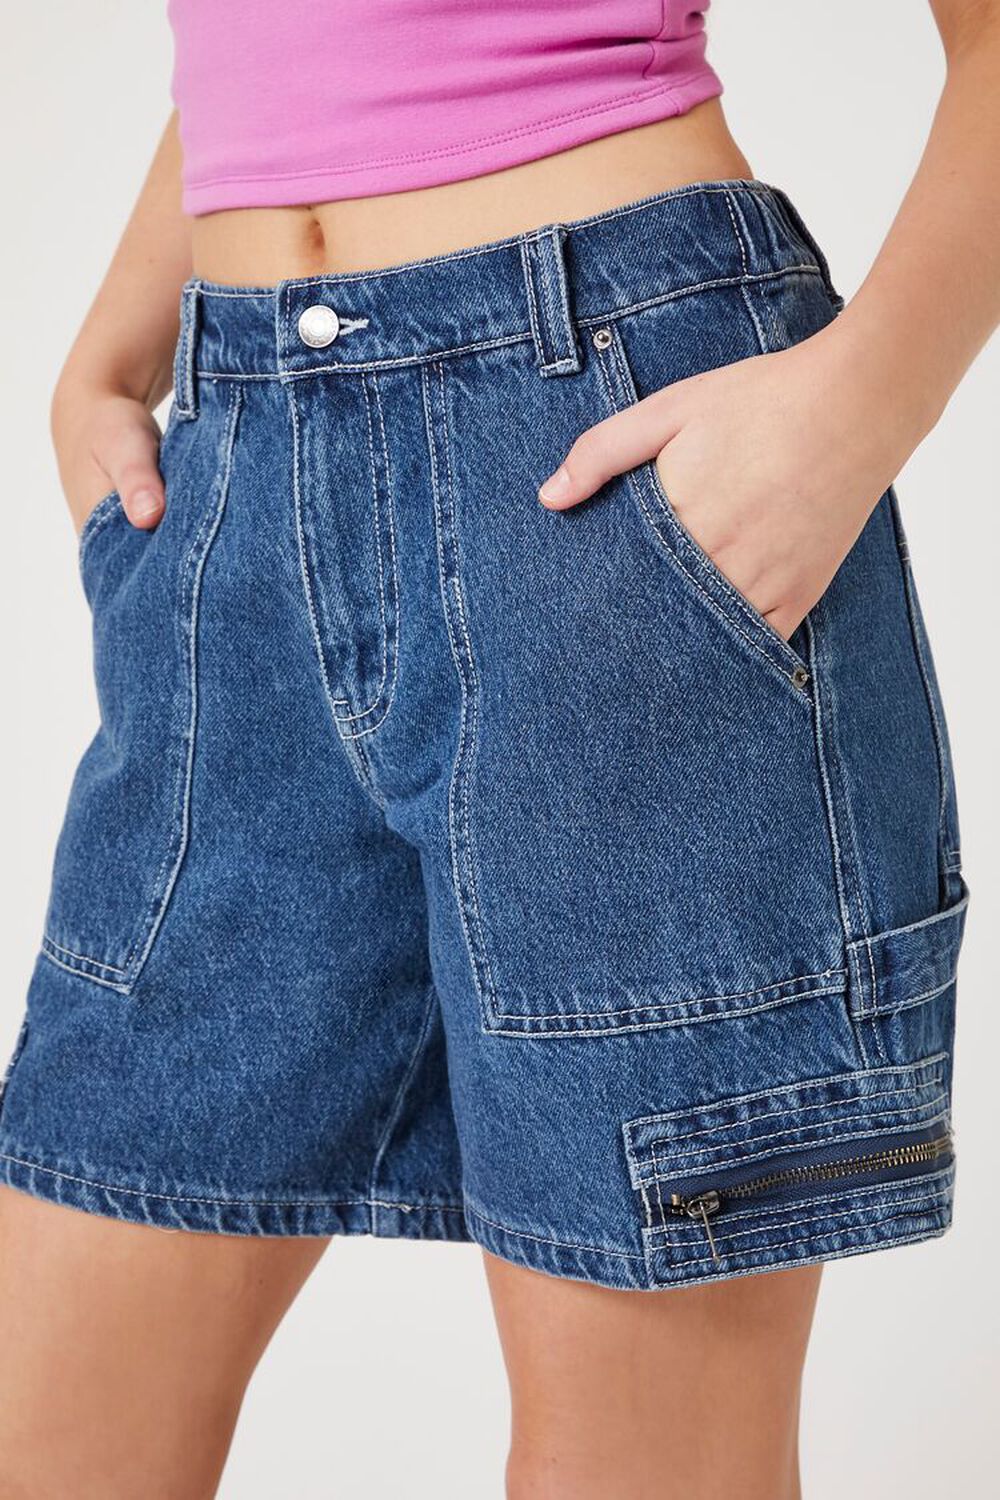 easyforever Women's Zipper Crotch Mini Denim Shorts Raw Hem Frayed Ultra  Short Jeans Hot Pants Dark Blue Small at  Women's Clothing store